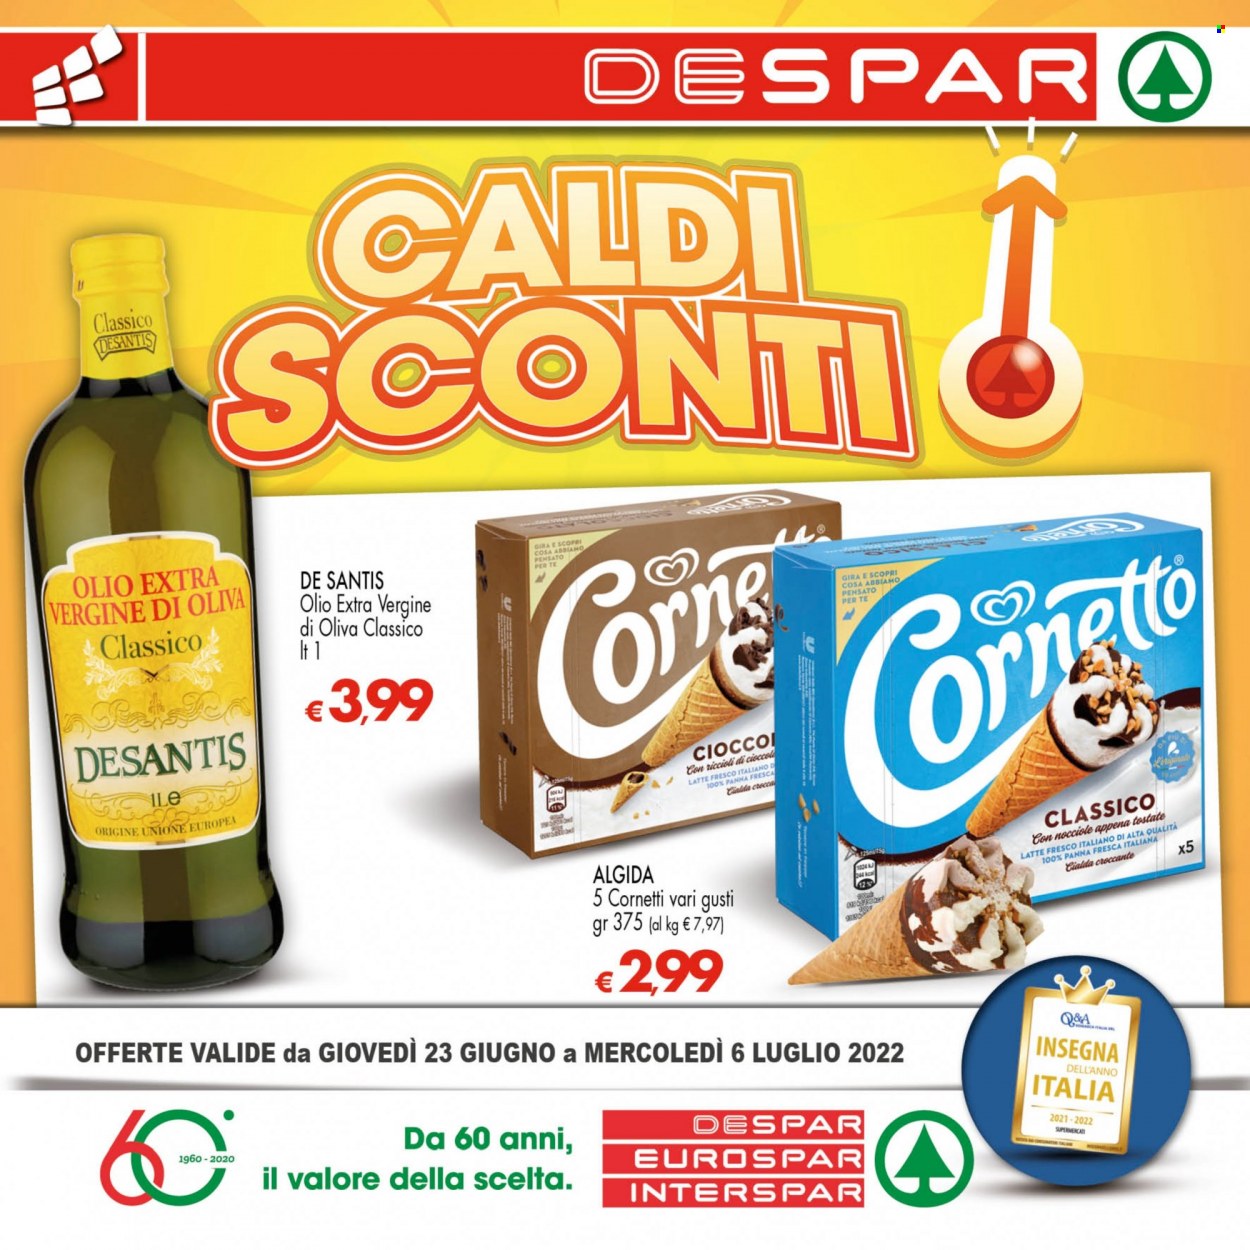 thumbnail - Volantino Interspar - 23/6/2022 - 6/7/2022 - Prodotti in offerta - croissant, latte, gelato, Algida, olio, olio extra vergine di oliva. Pagina 1.